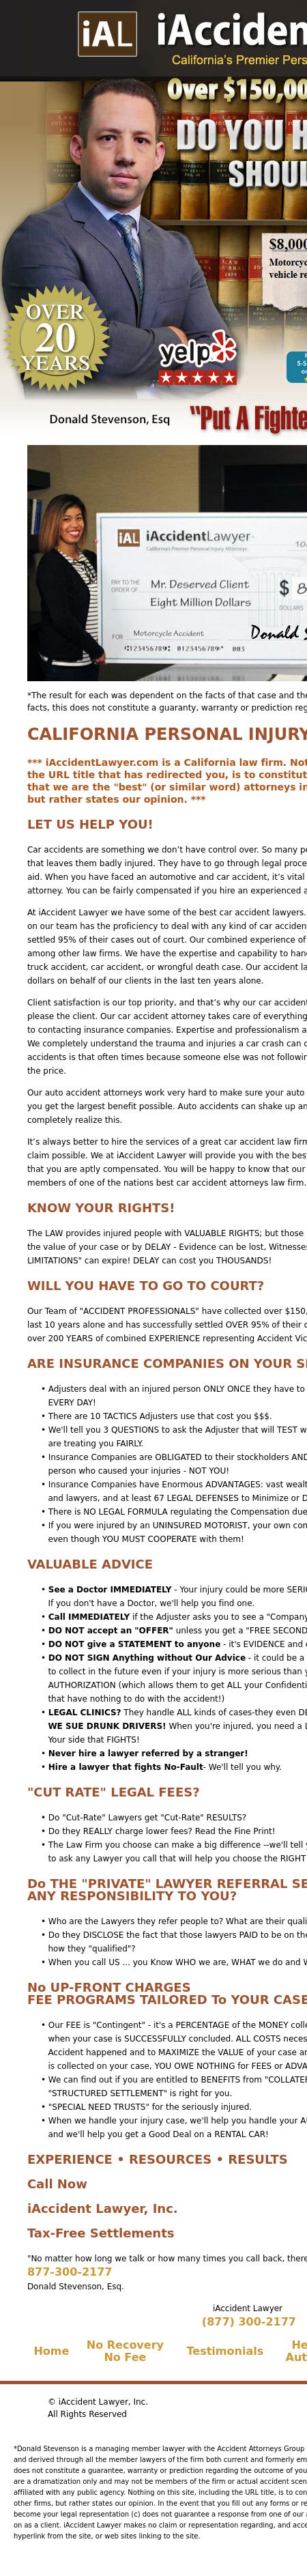 Lawyer Help 24-7 - Ventura CA Lawyers